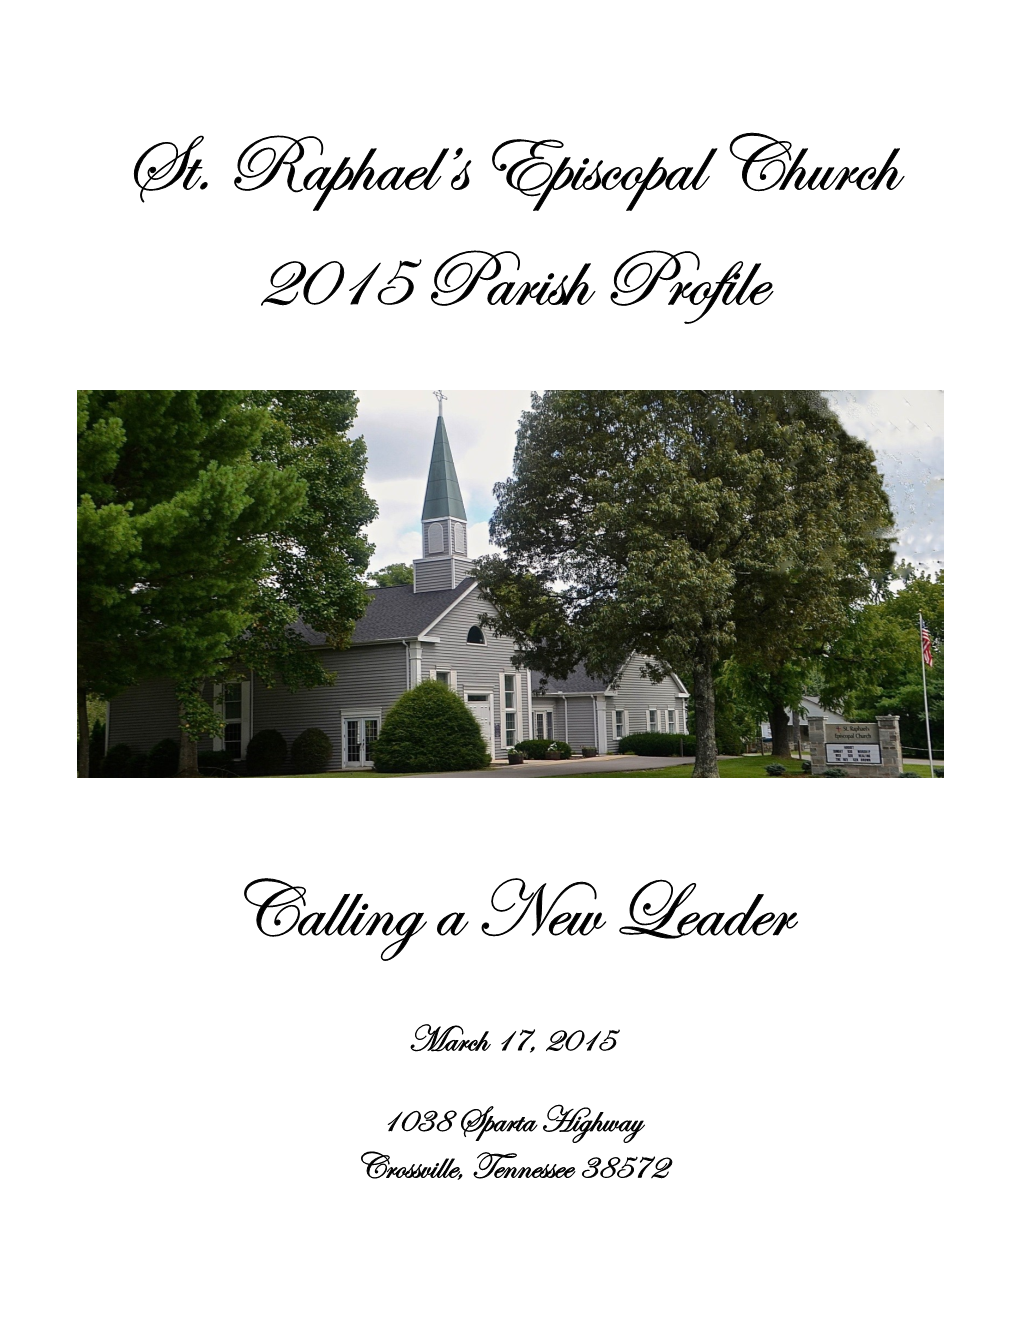 St. Raphael's Episcopal Church 2015 Parish Profile Calling a New Leader